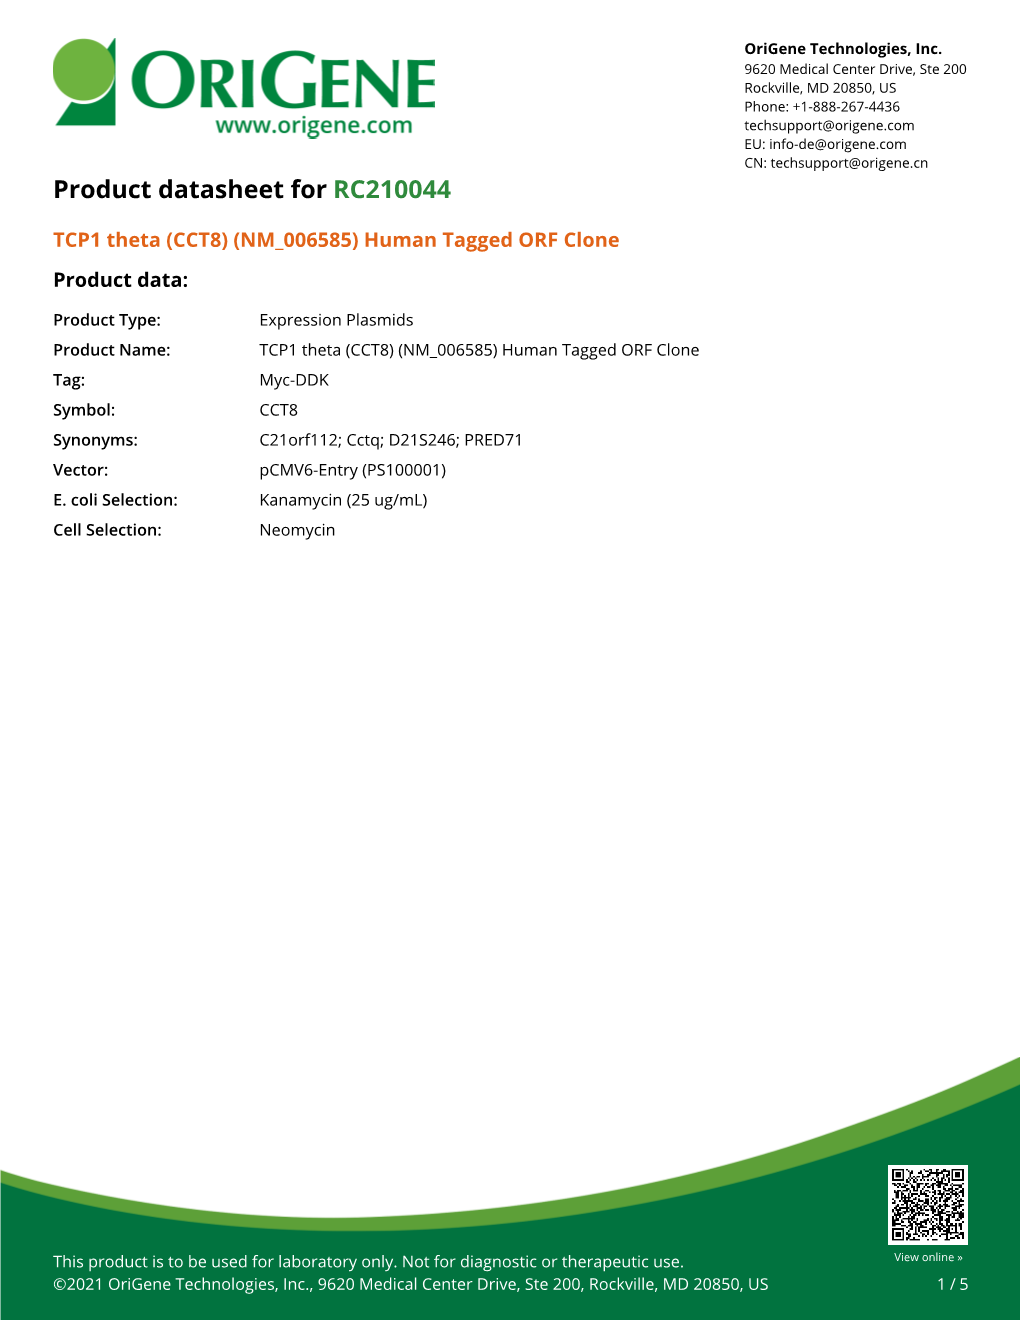 TCP1 Theta (CCT8) (NM 006585) Human Tagged ORF Clone Product Data